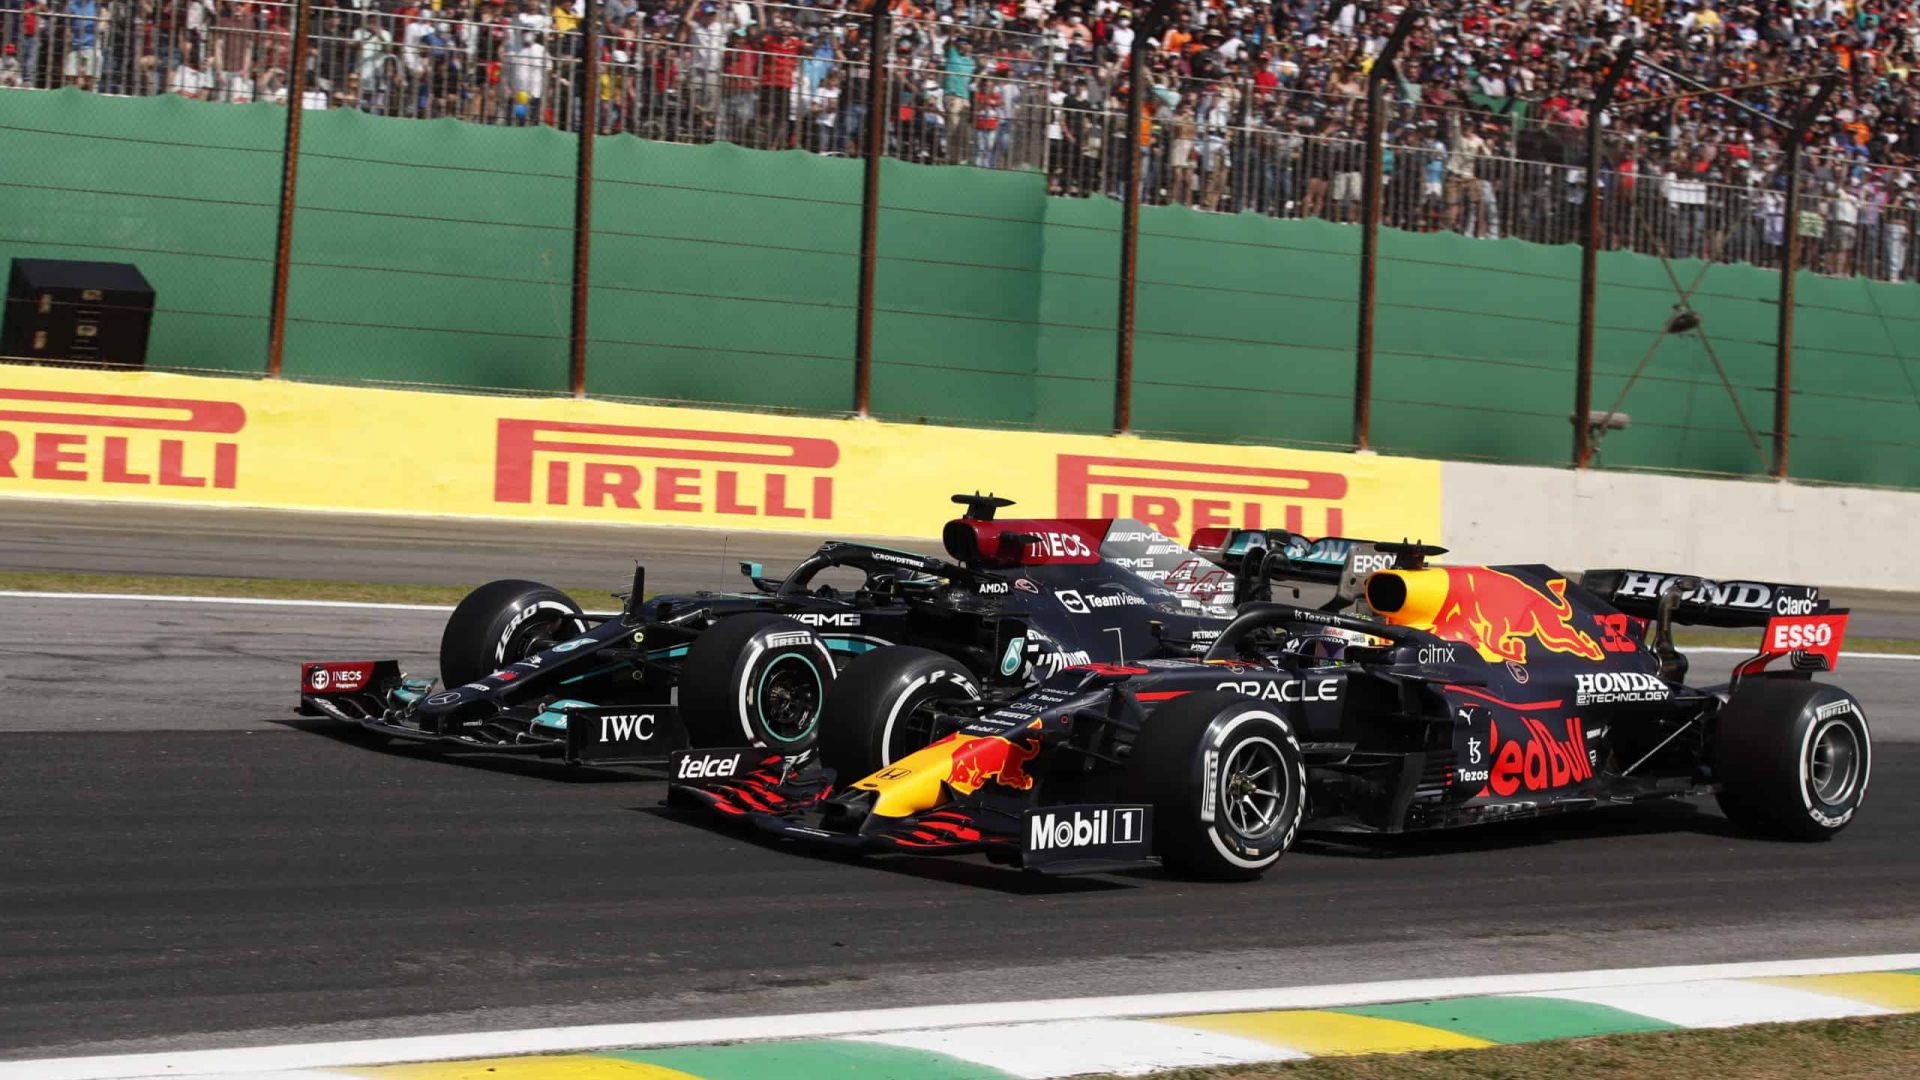 Reviewing The 2021 F1 Season: The Top Three Teams